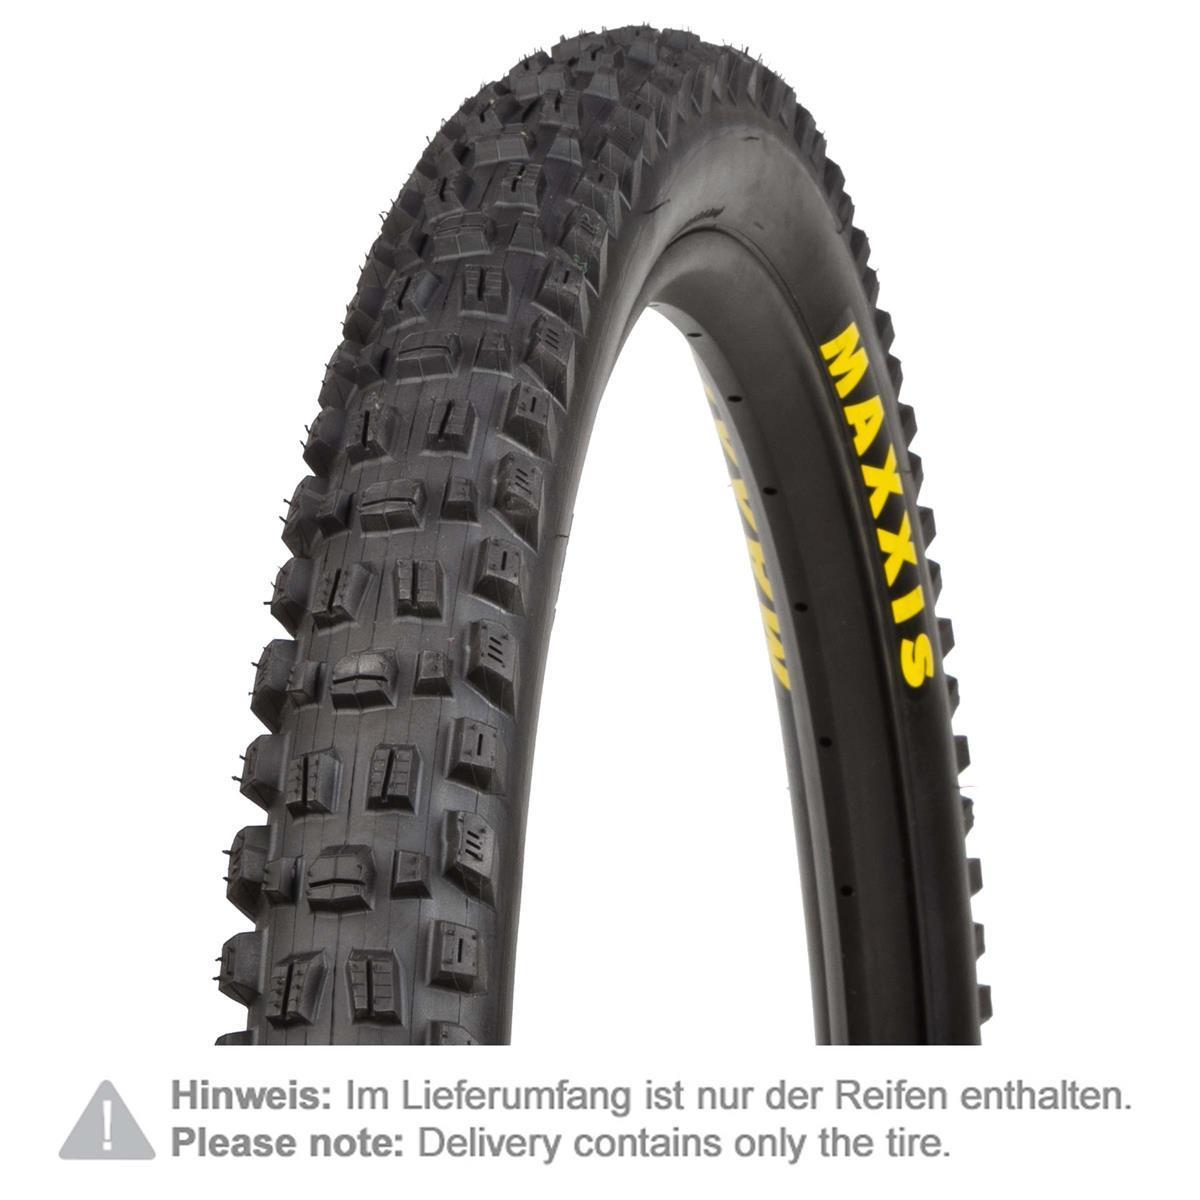 29 inch mountain bike tires tubeless